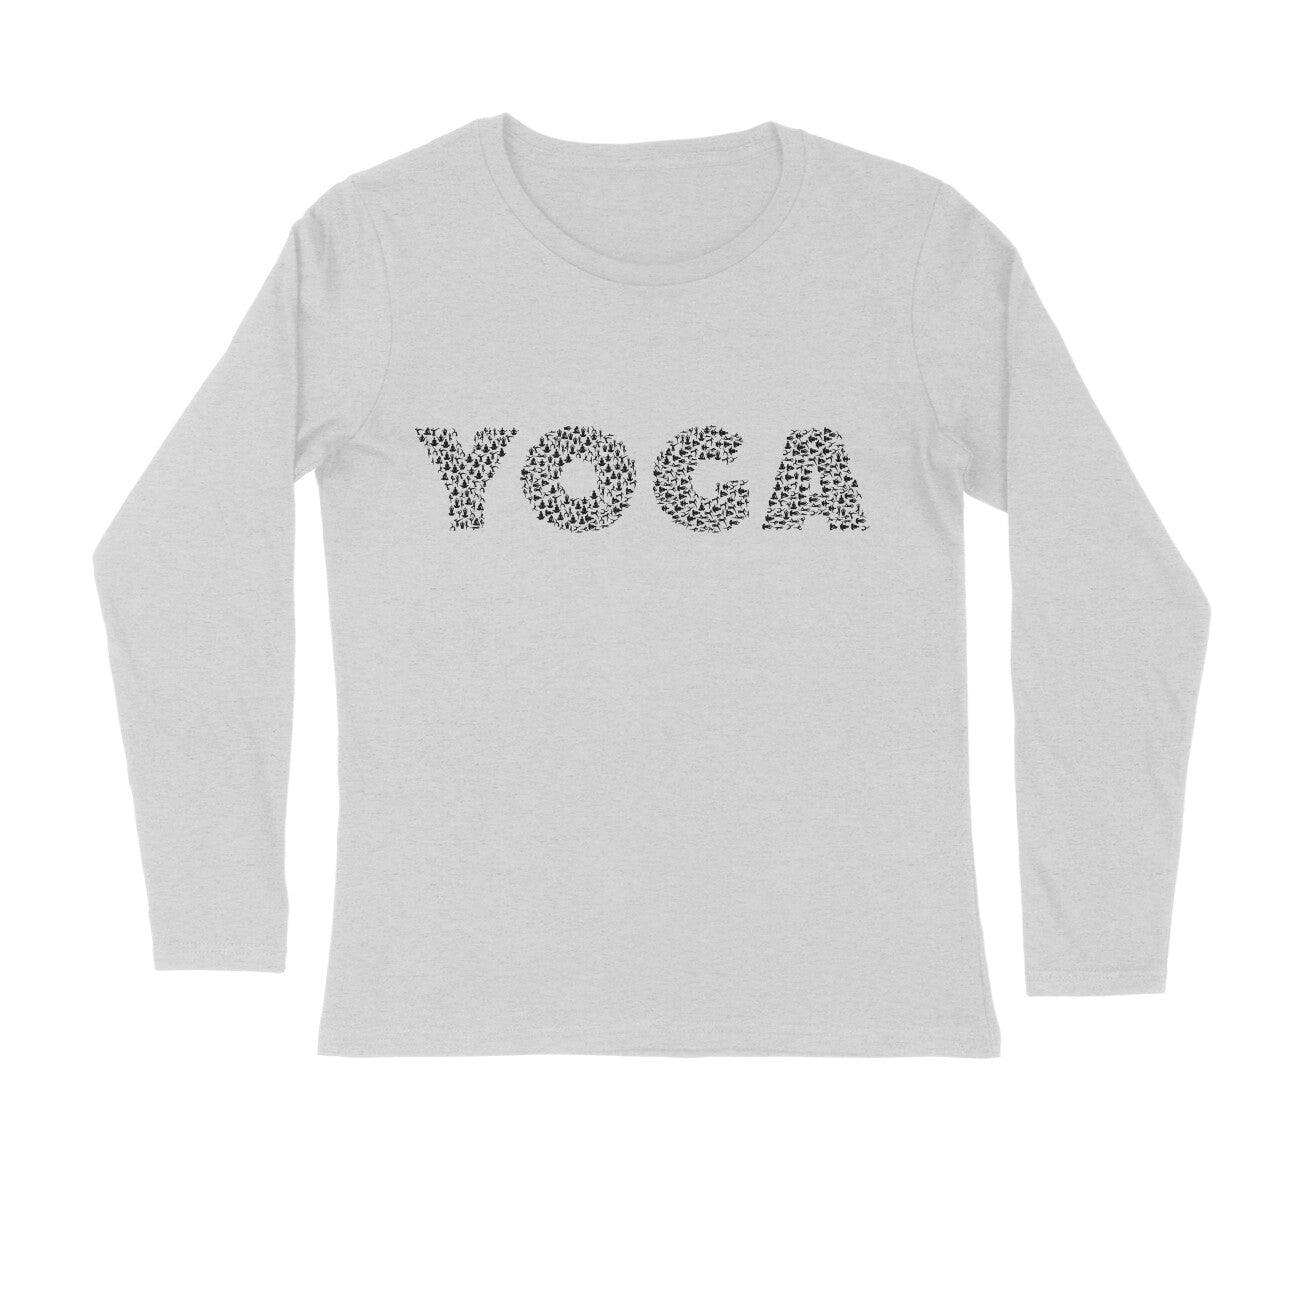 Men's Long Sleeve T-shirt -Yoga - Black Text puraidoprints